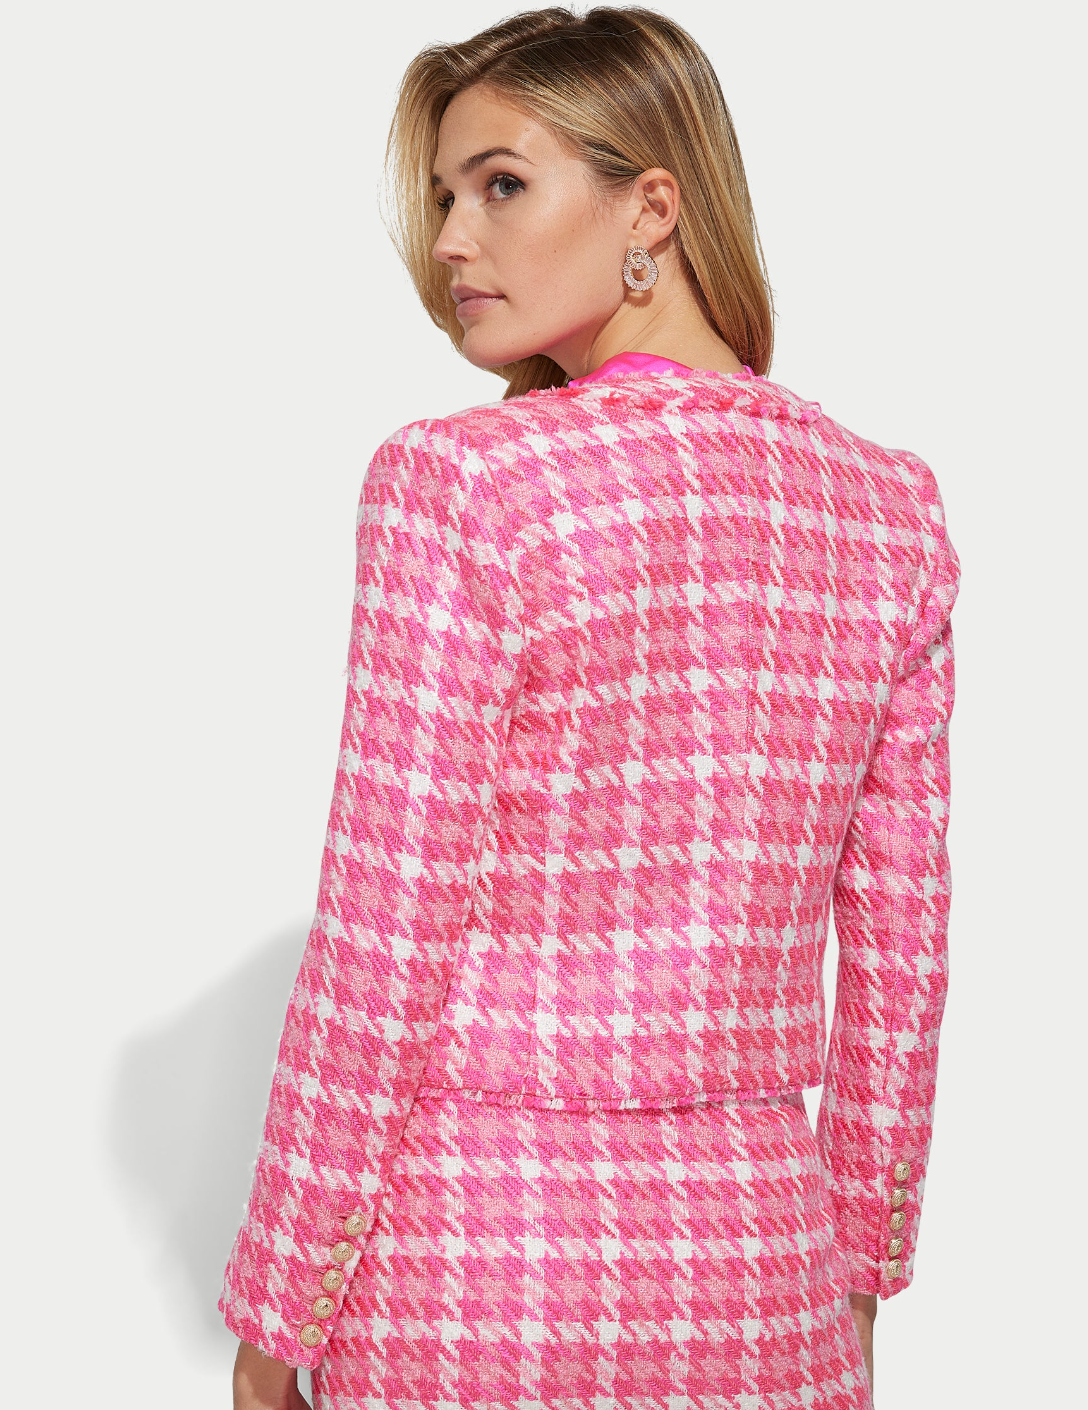 Kristen tweed jacket - pink